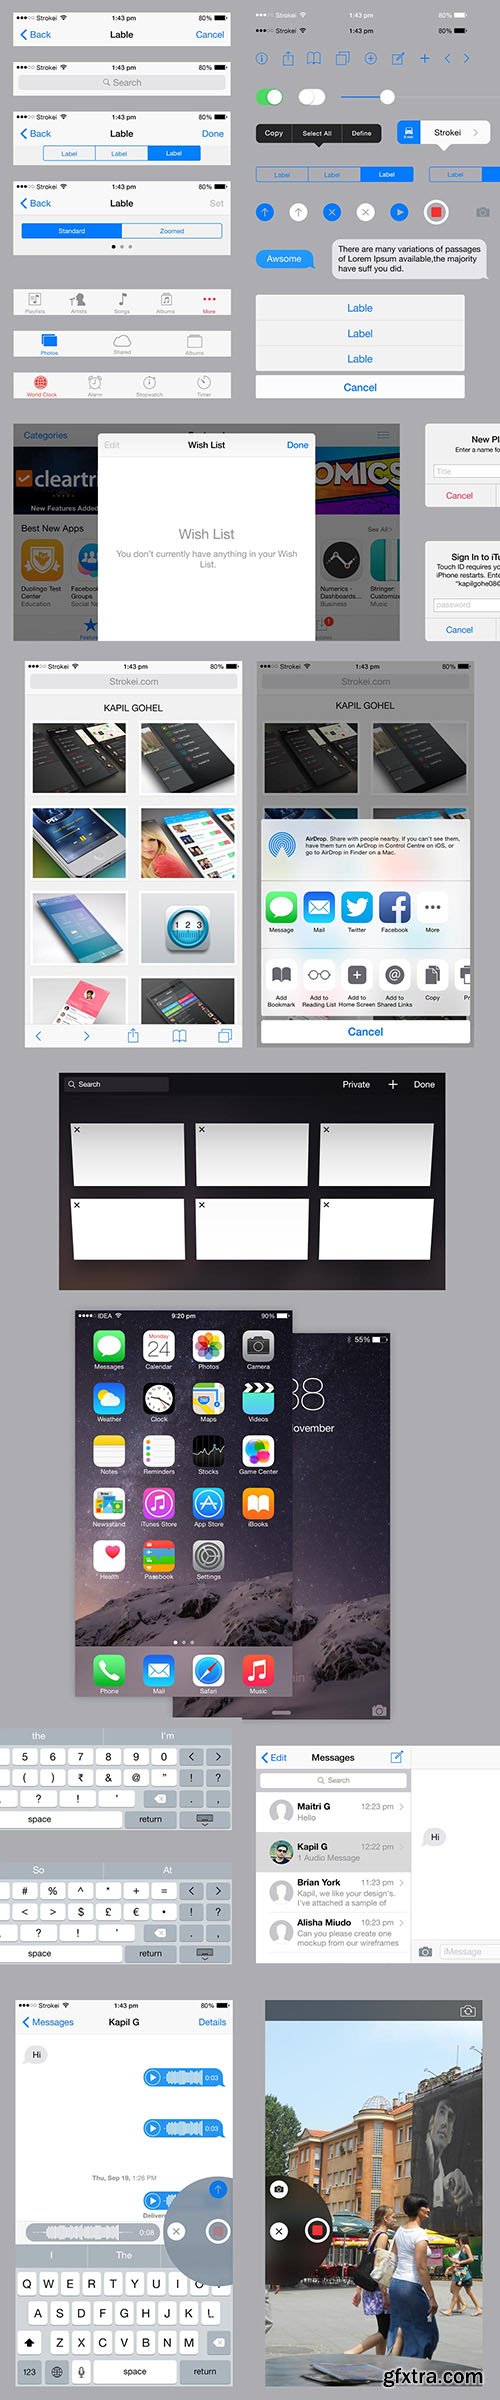 PSD Web Design - IOS 8 IPhone 6 Plus UI Kit